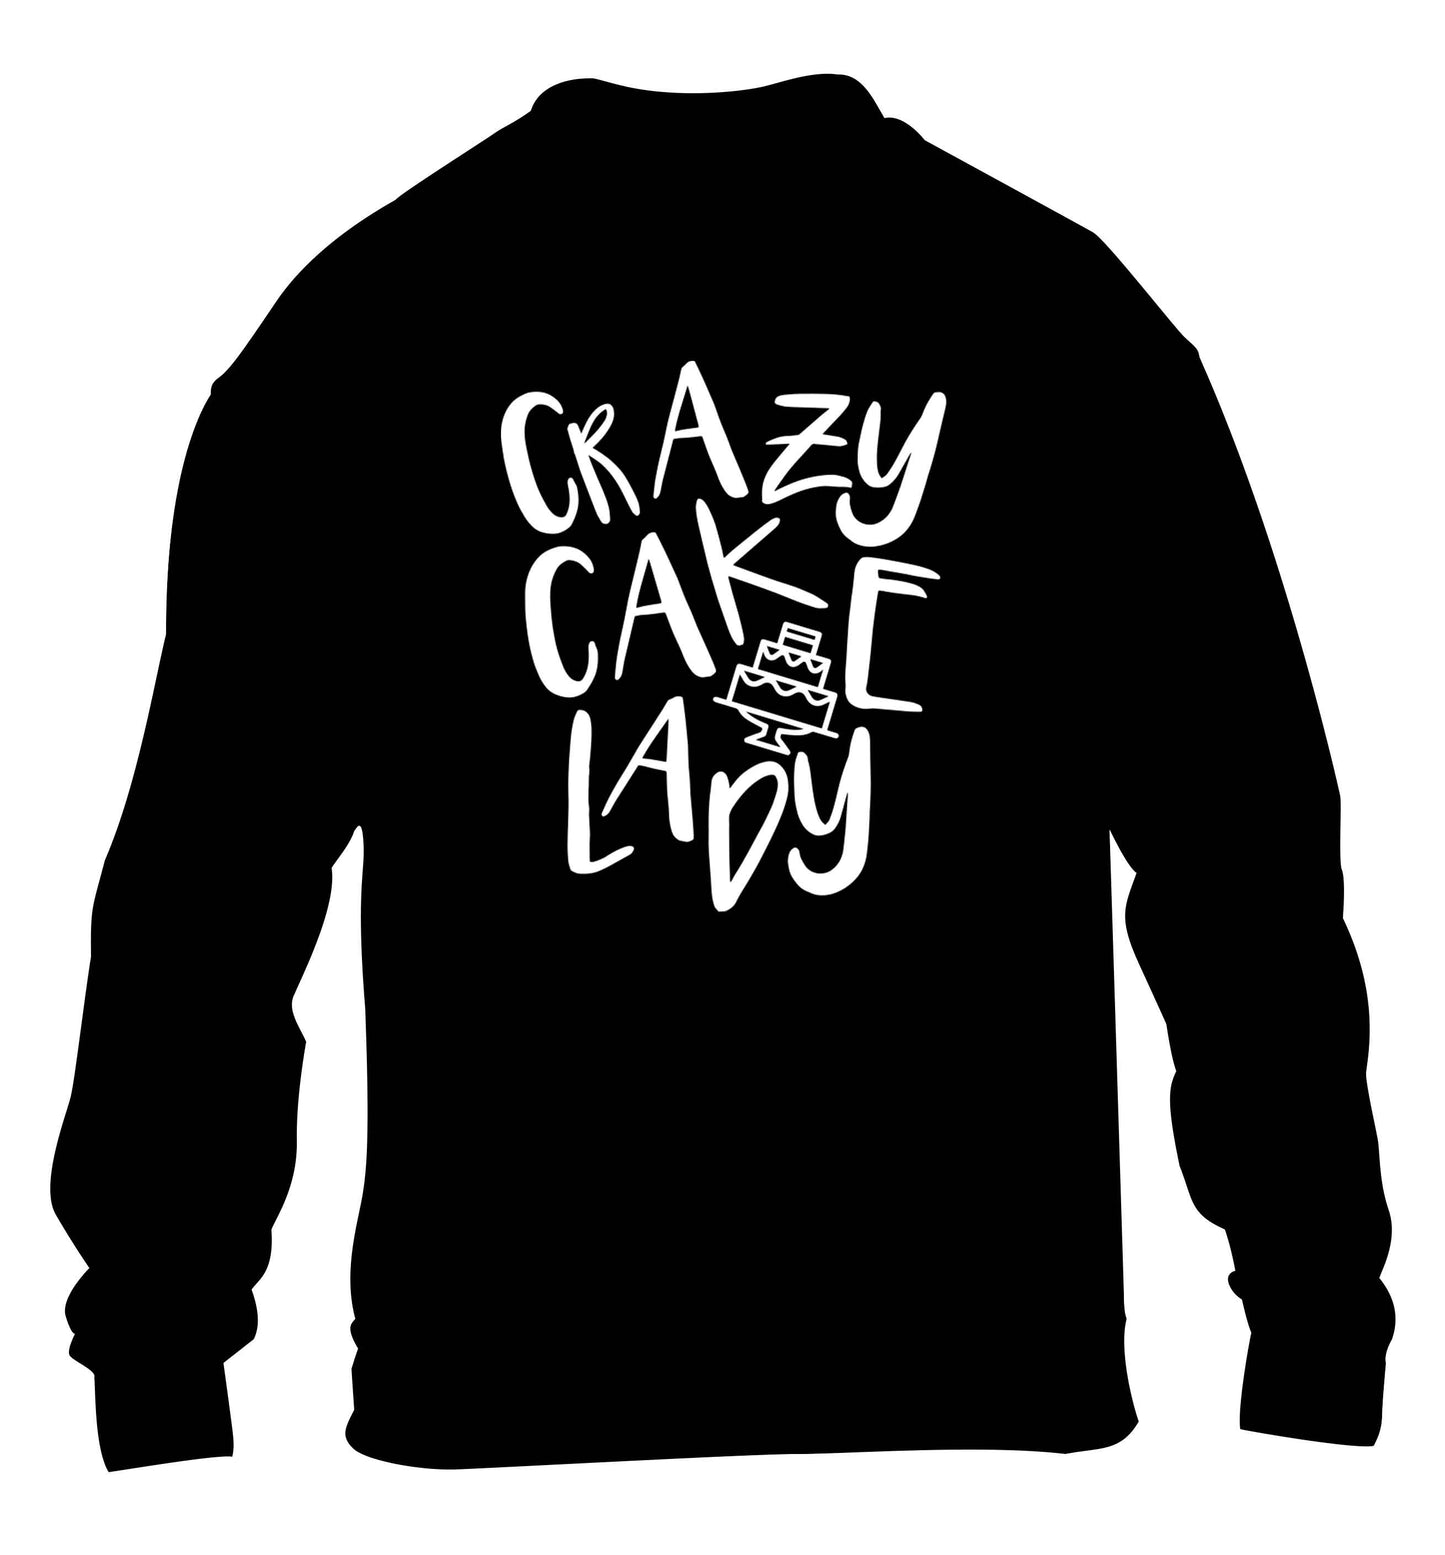 Crazy cake lady children's black sweater 12-13 Years